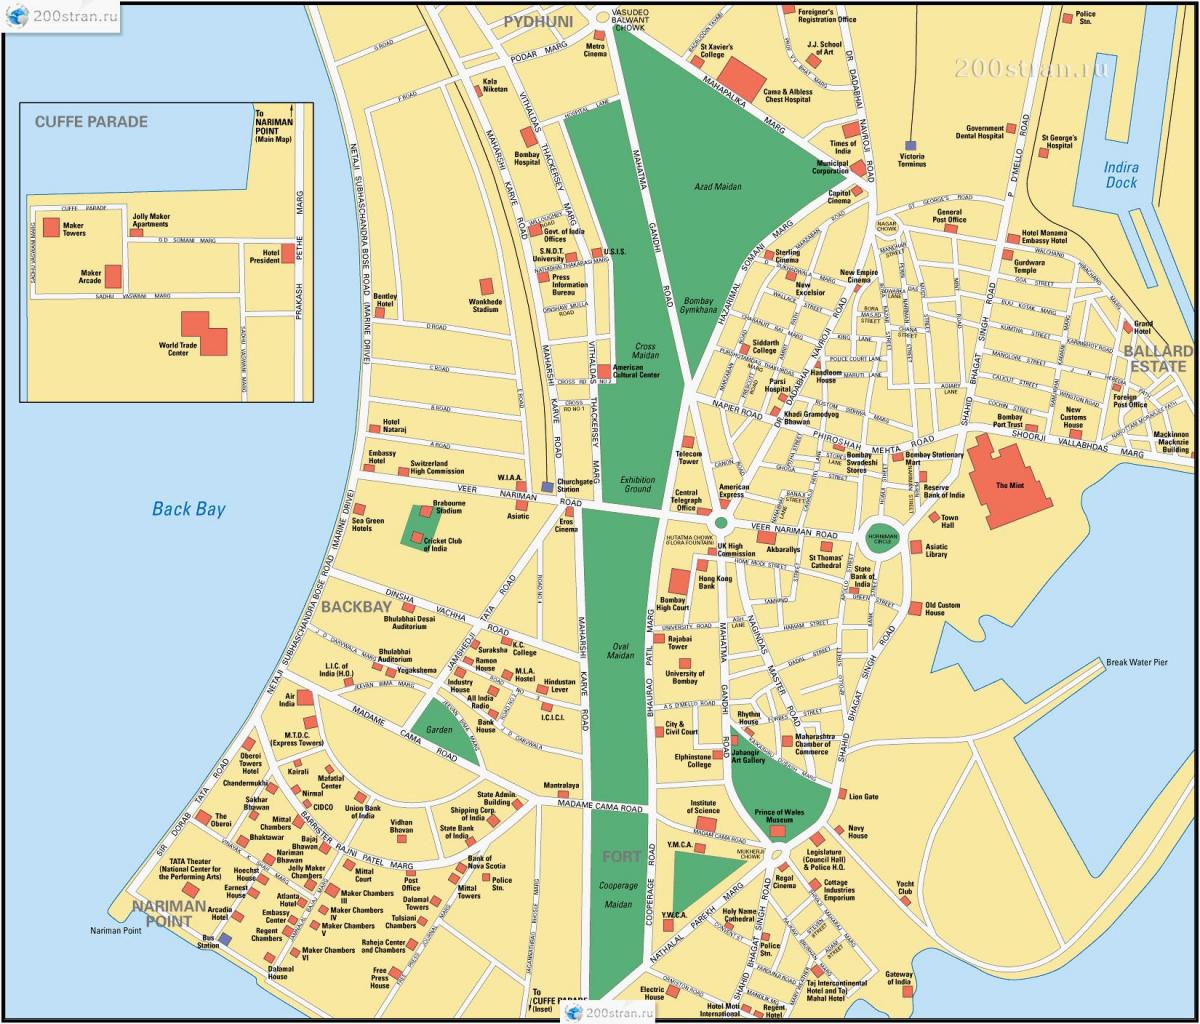 Plan des rues de Mumbai - Bombay